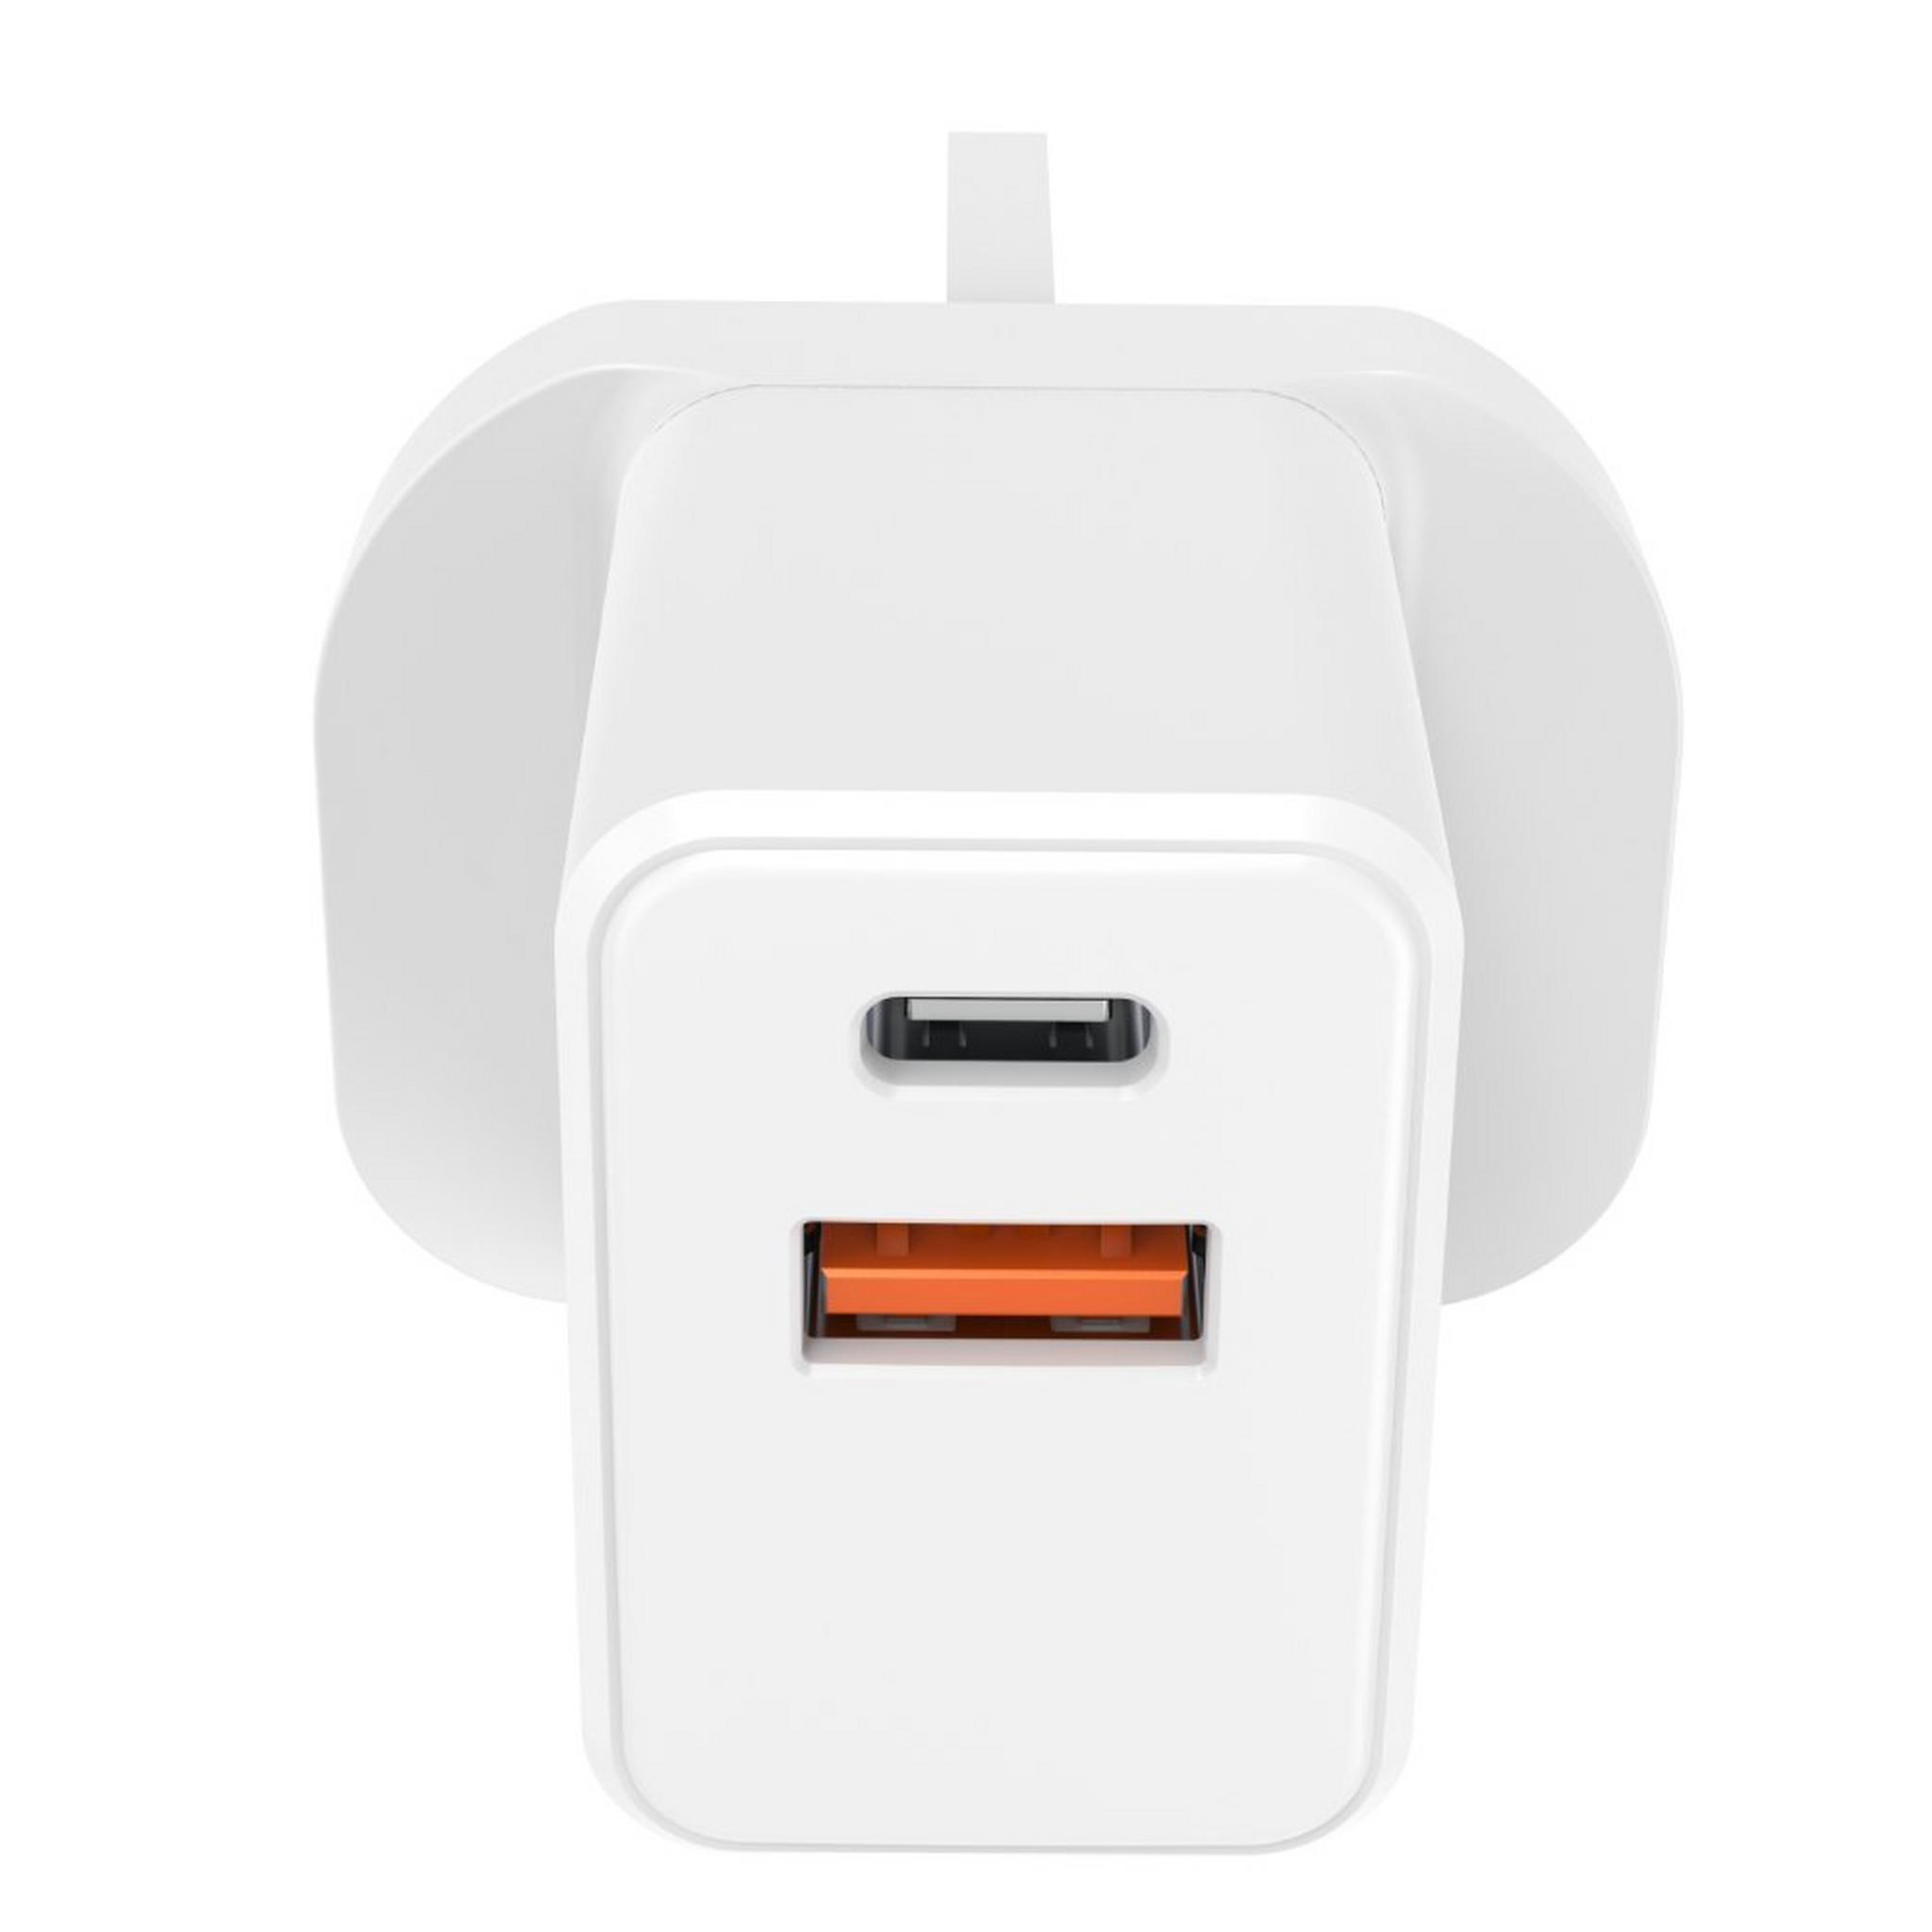 EQ Gan 20W Power Delivery Wall Charger, USB-C + USB-A Ports, VTX-20VHAC-3 – White